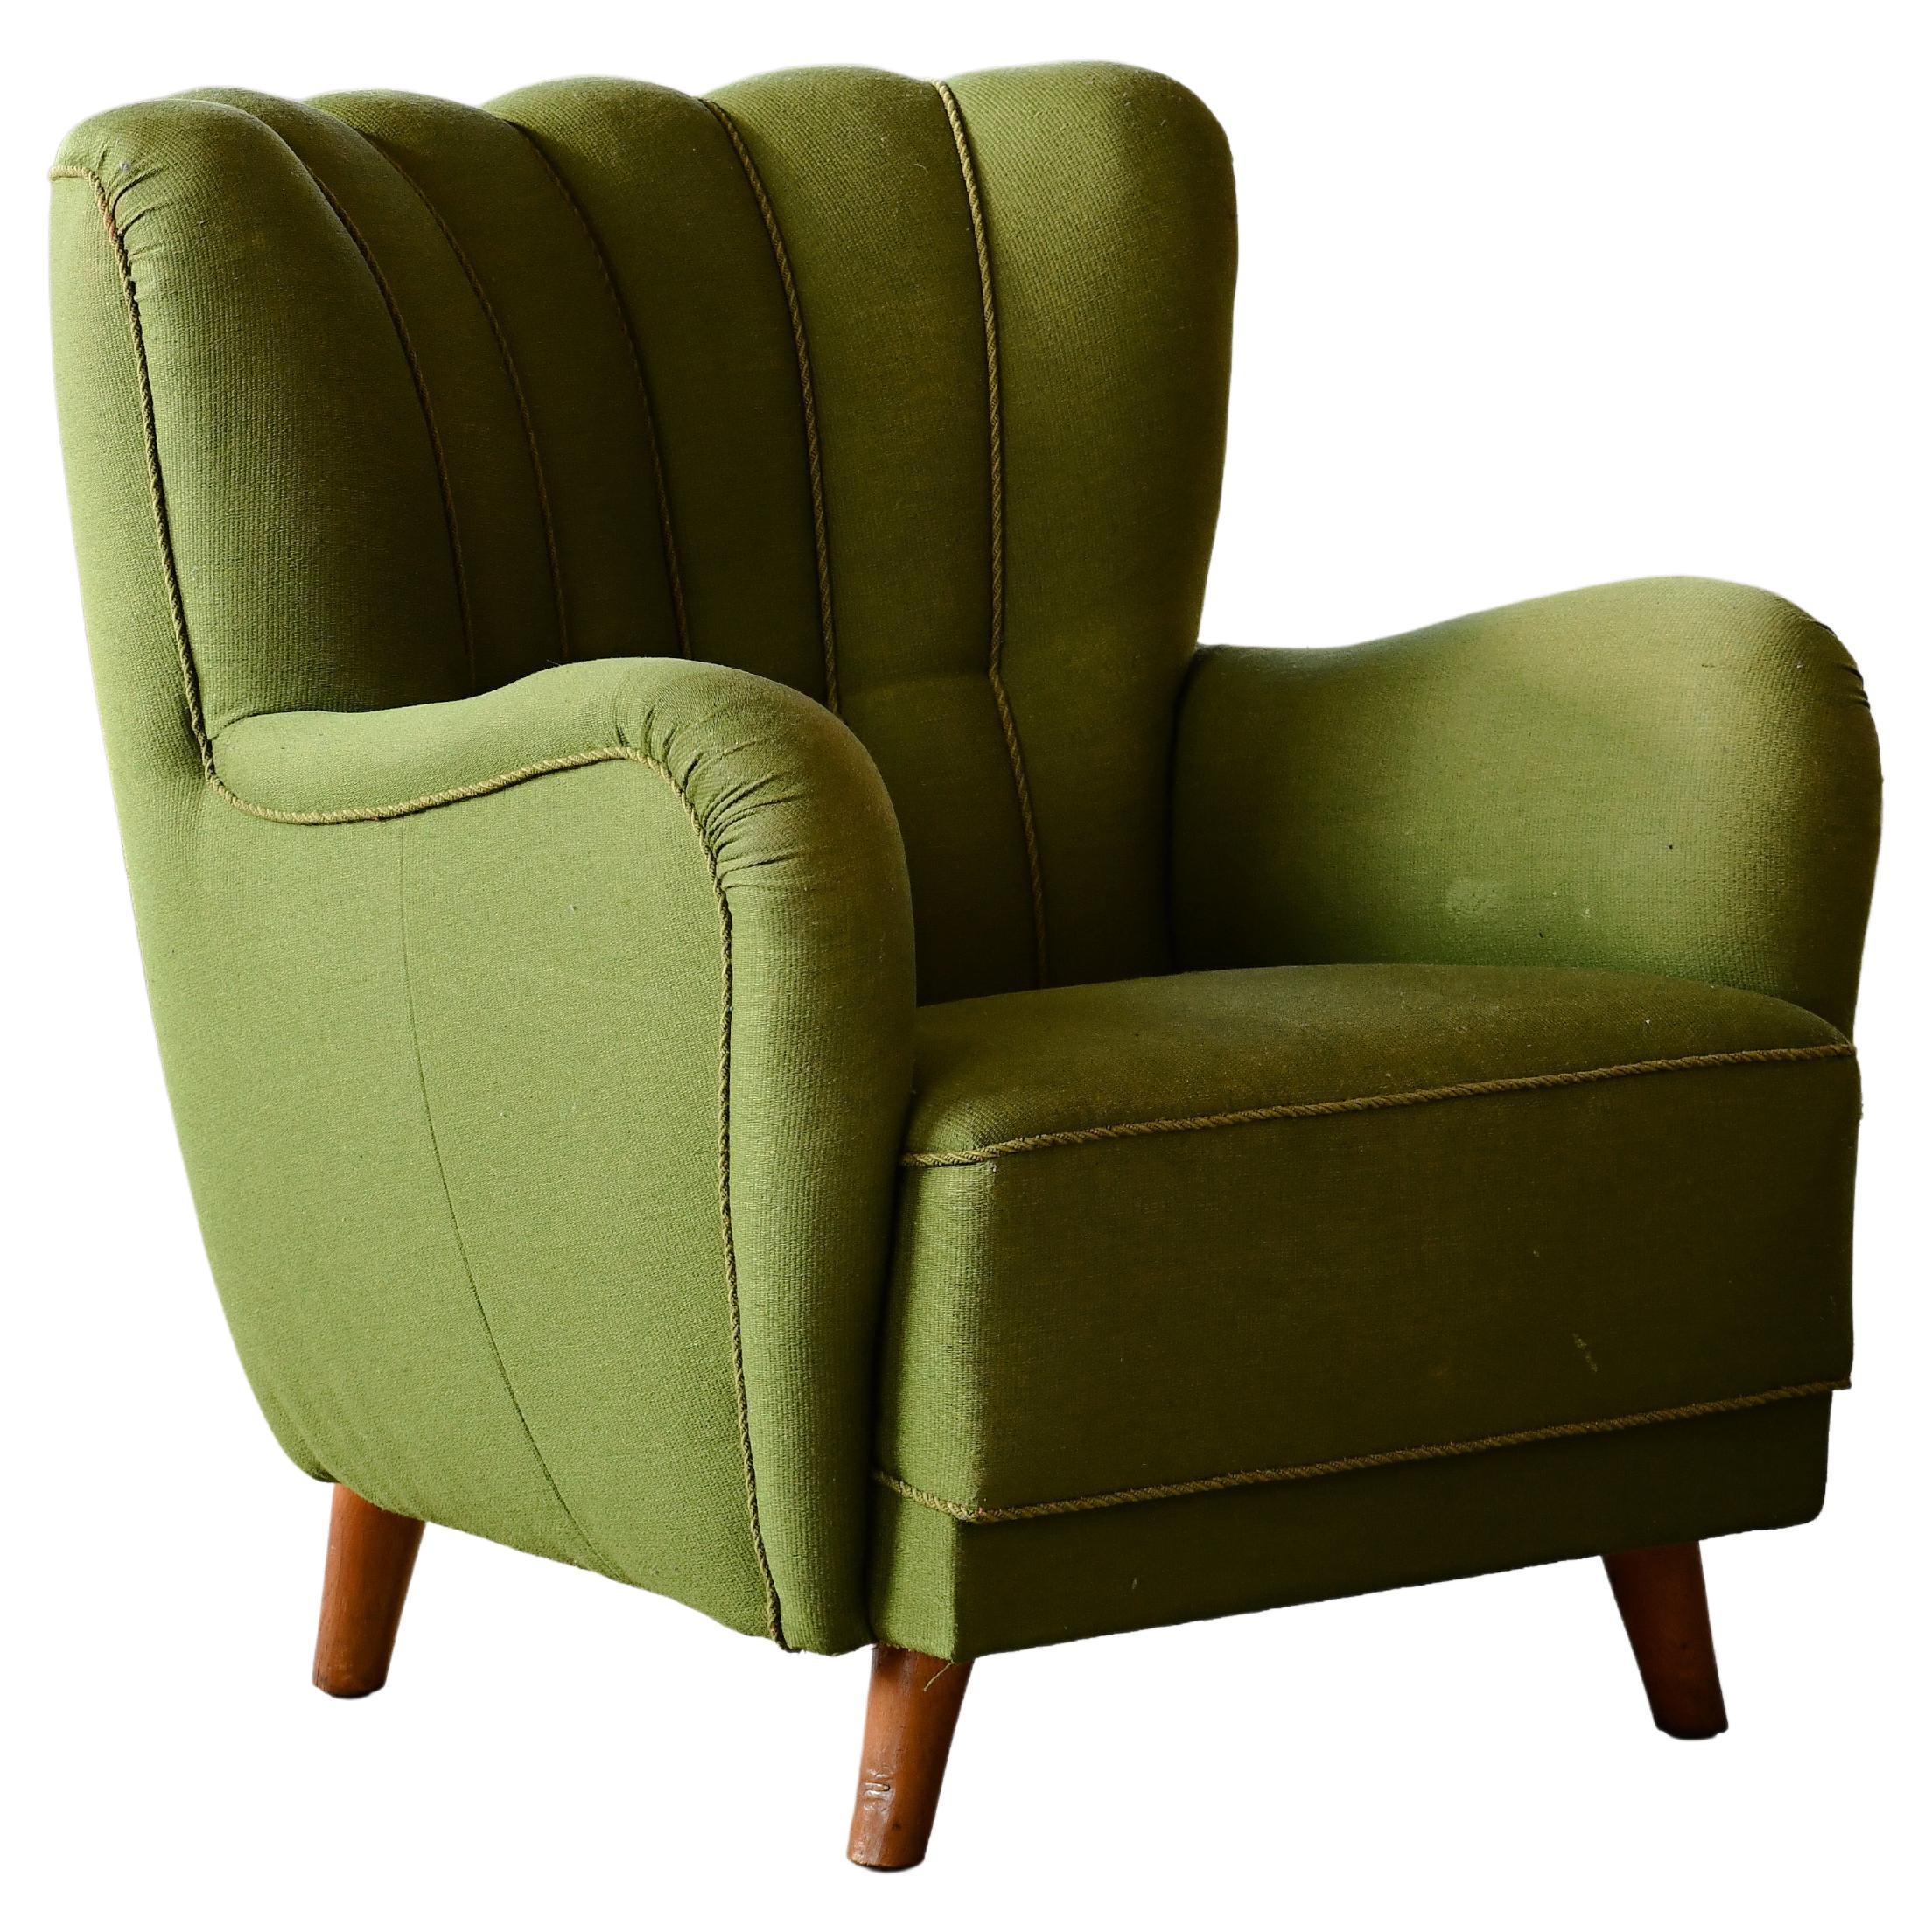 Danish 1940s Channel Back Low Back Lounge Chair in Emerald Green Wool